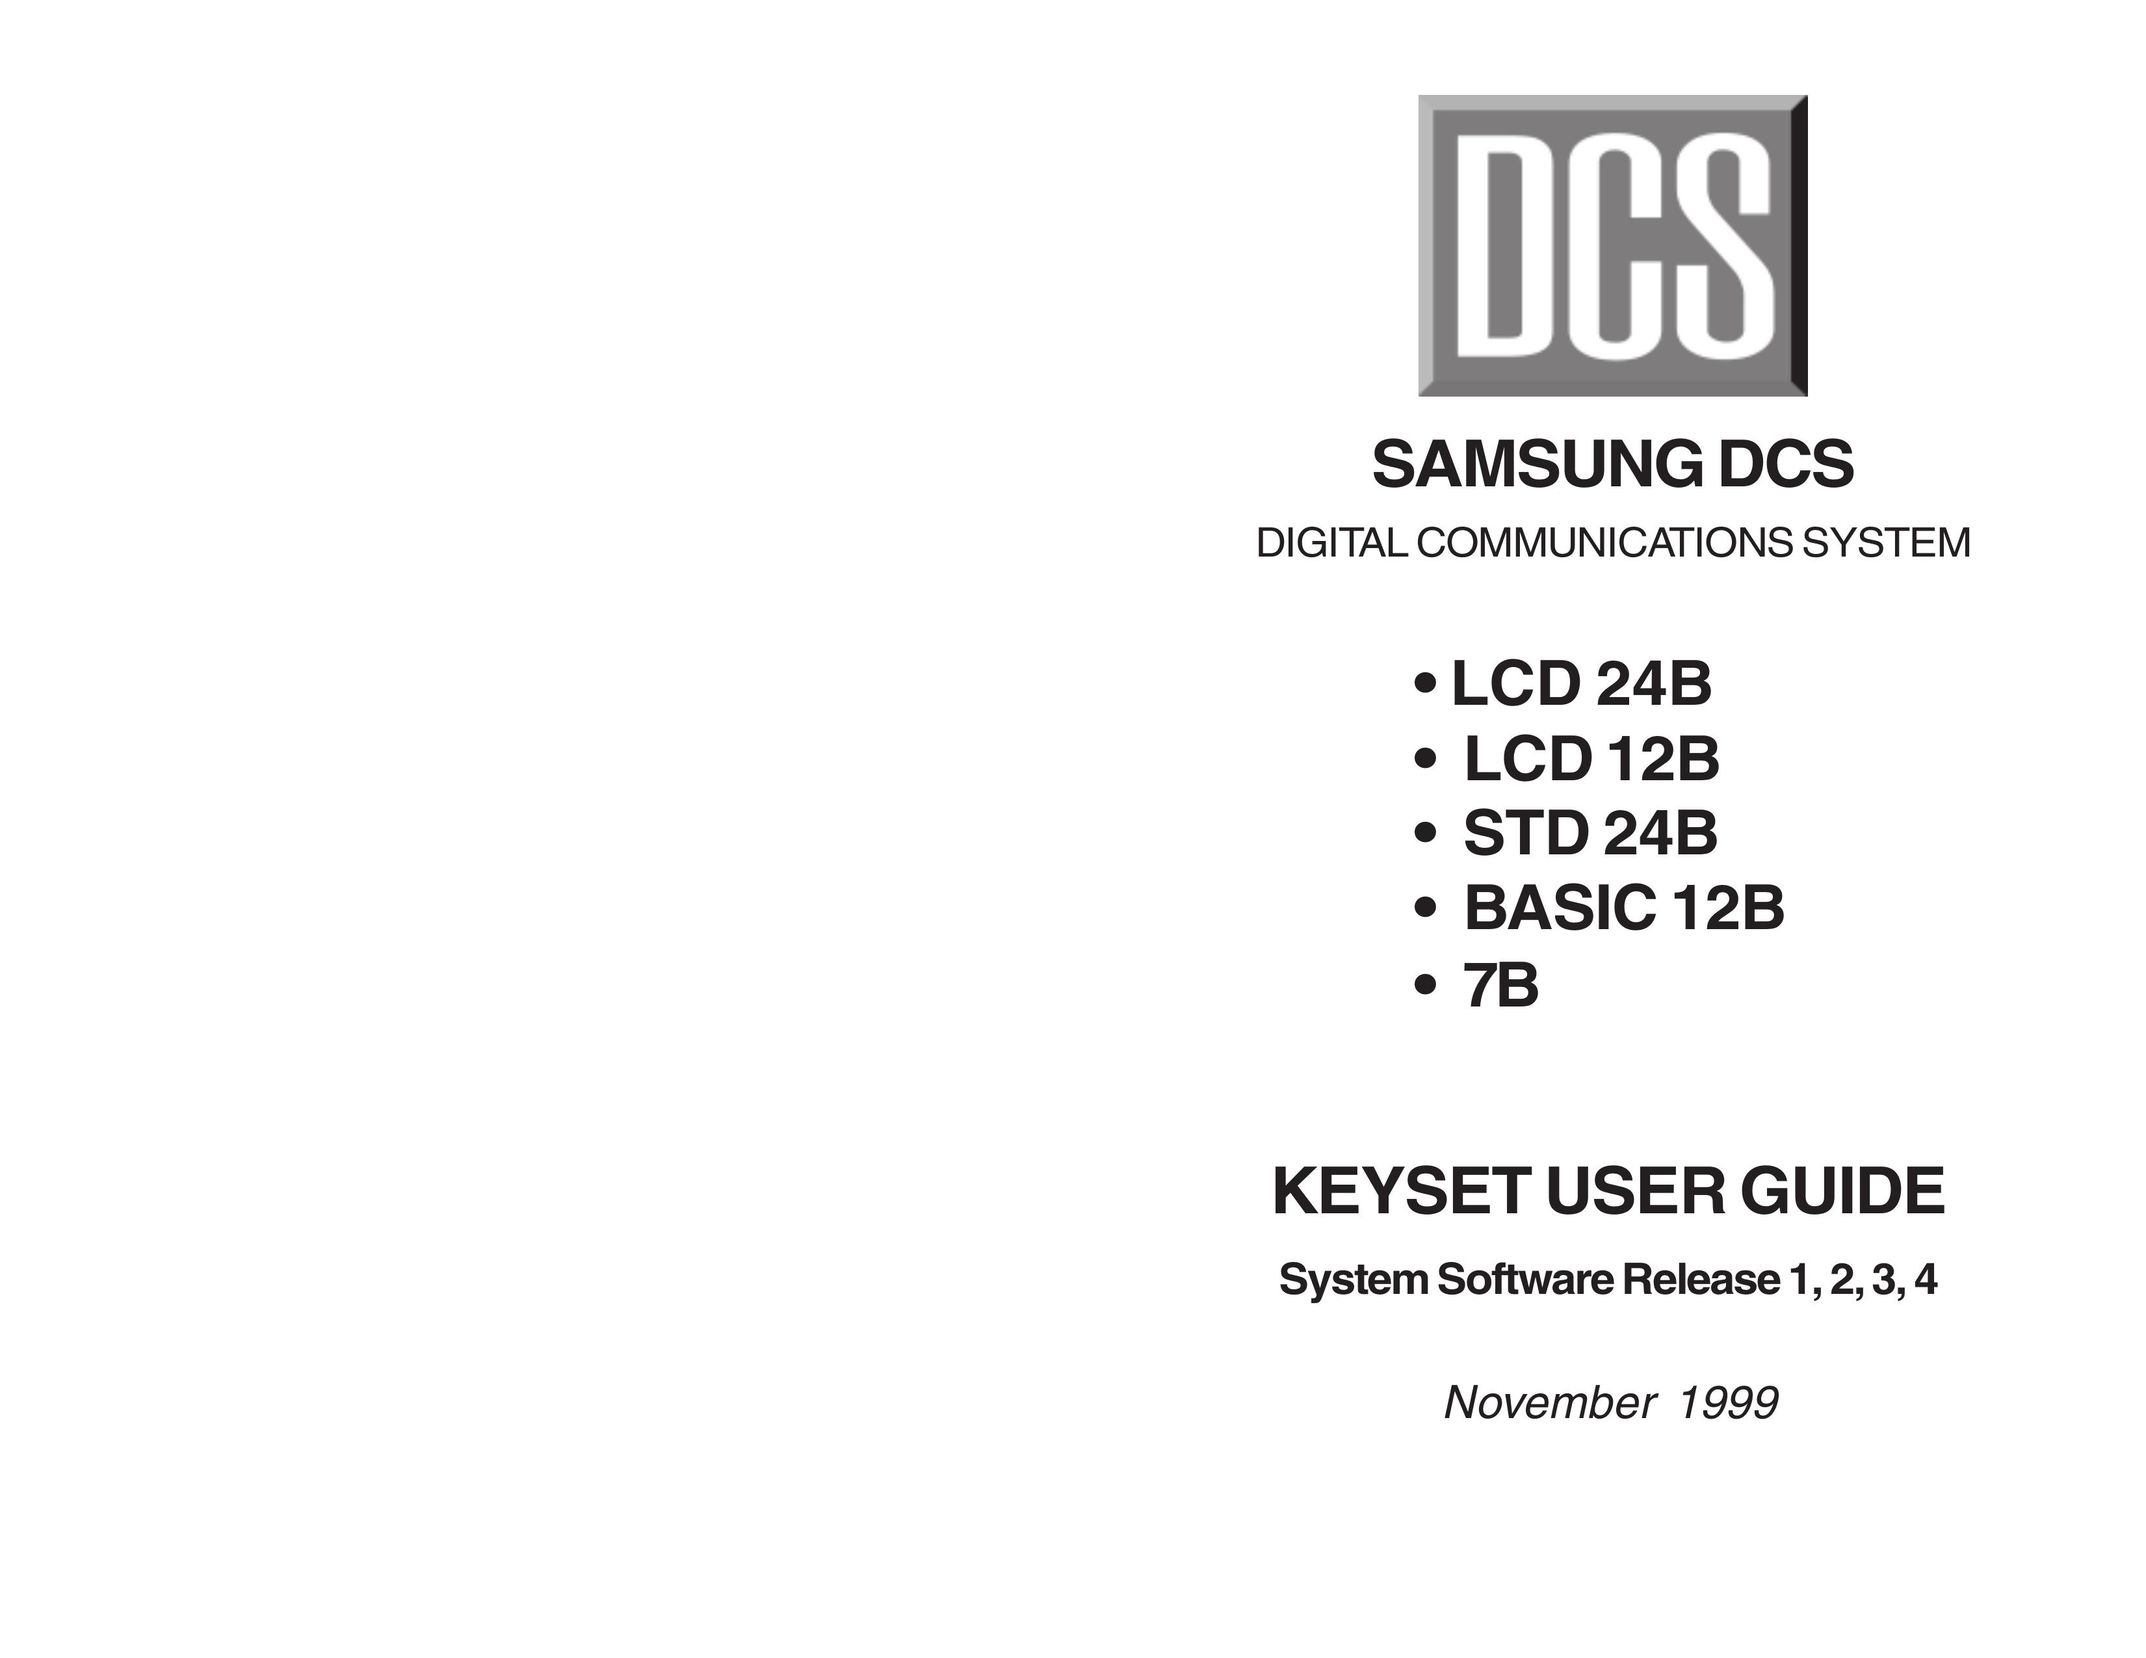 Samsung 7B Answering Machine User Manual